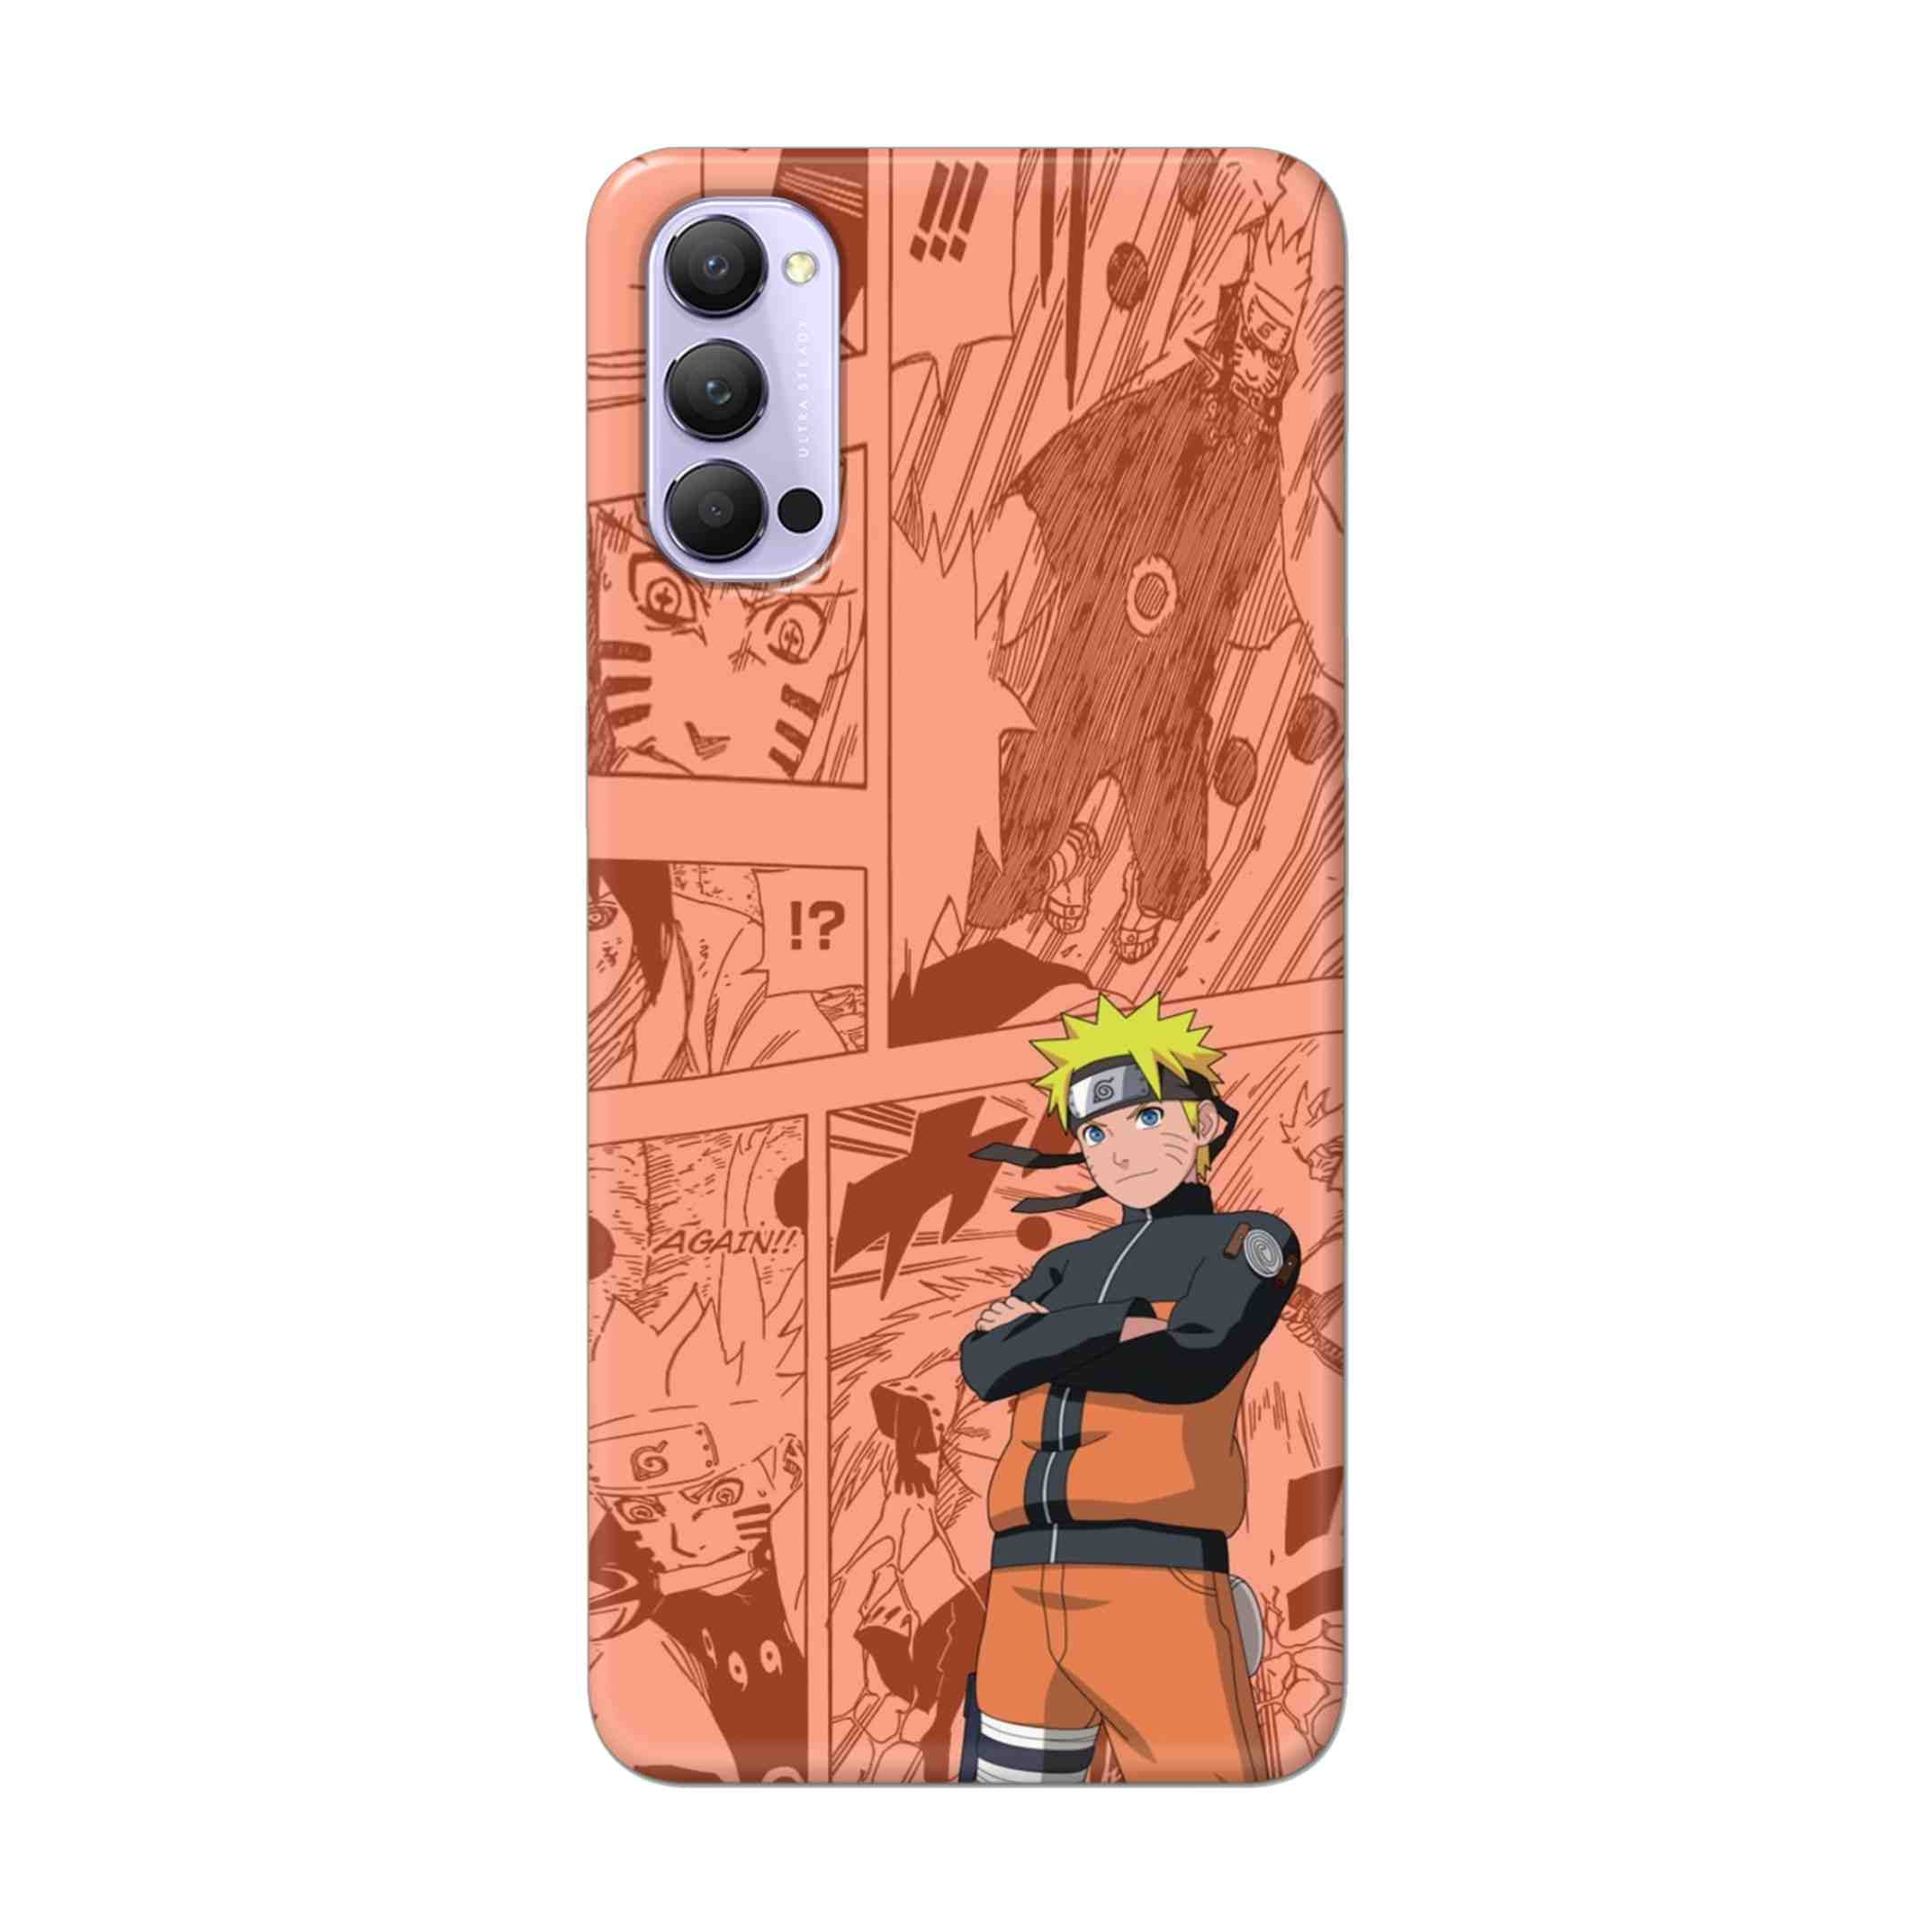 Buy Naruto Hard Back Mobile Phone Case Cover For Oppo Reno 4 Pro Online